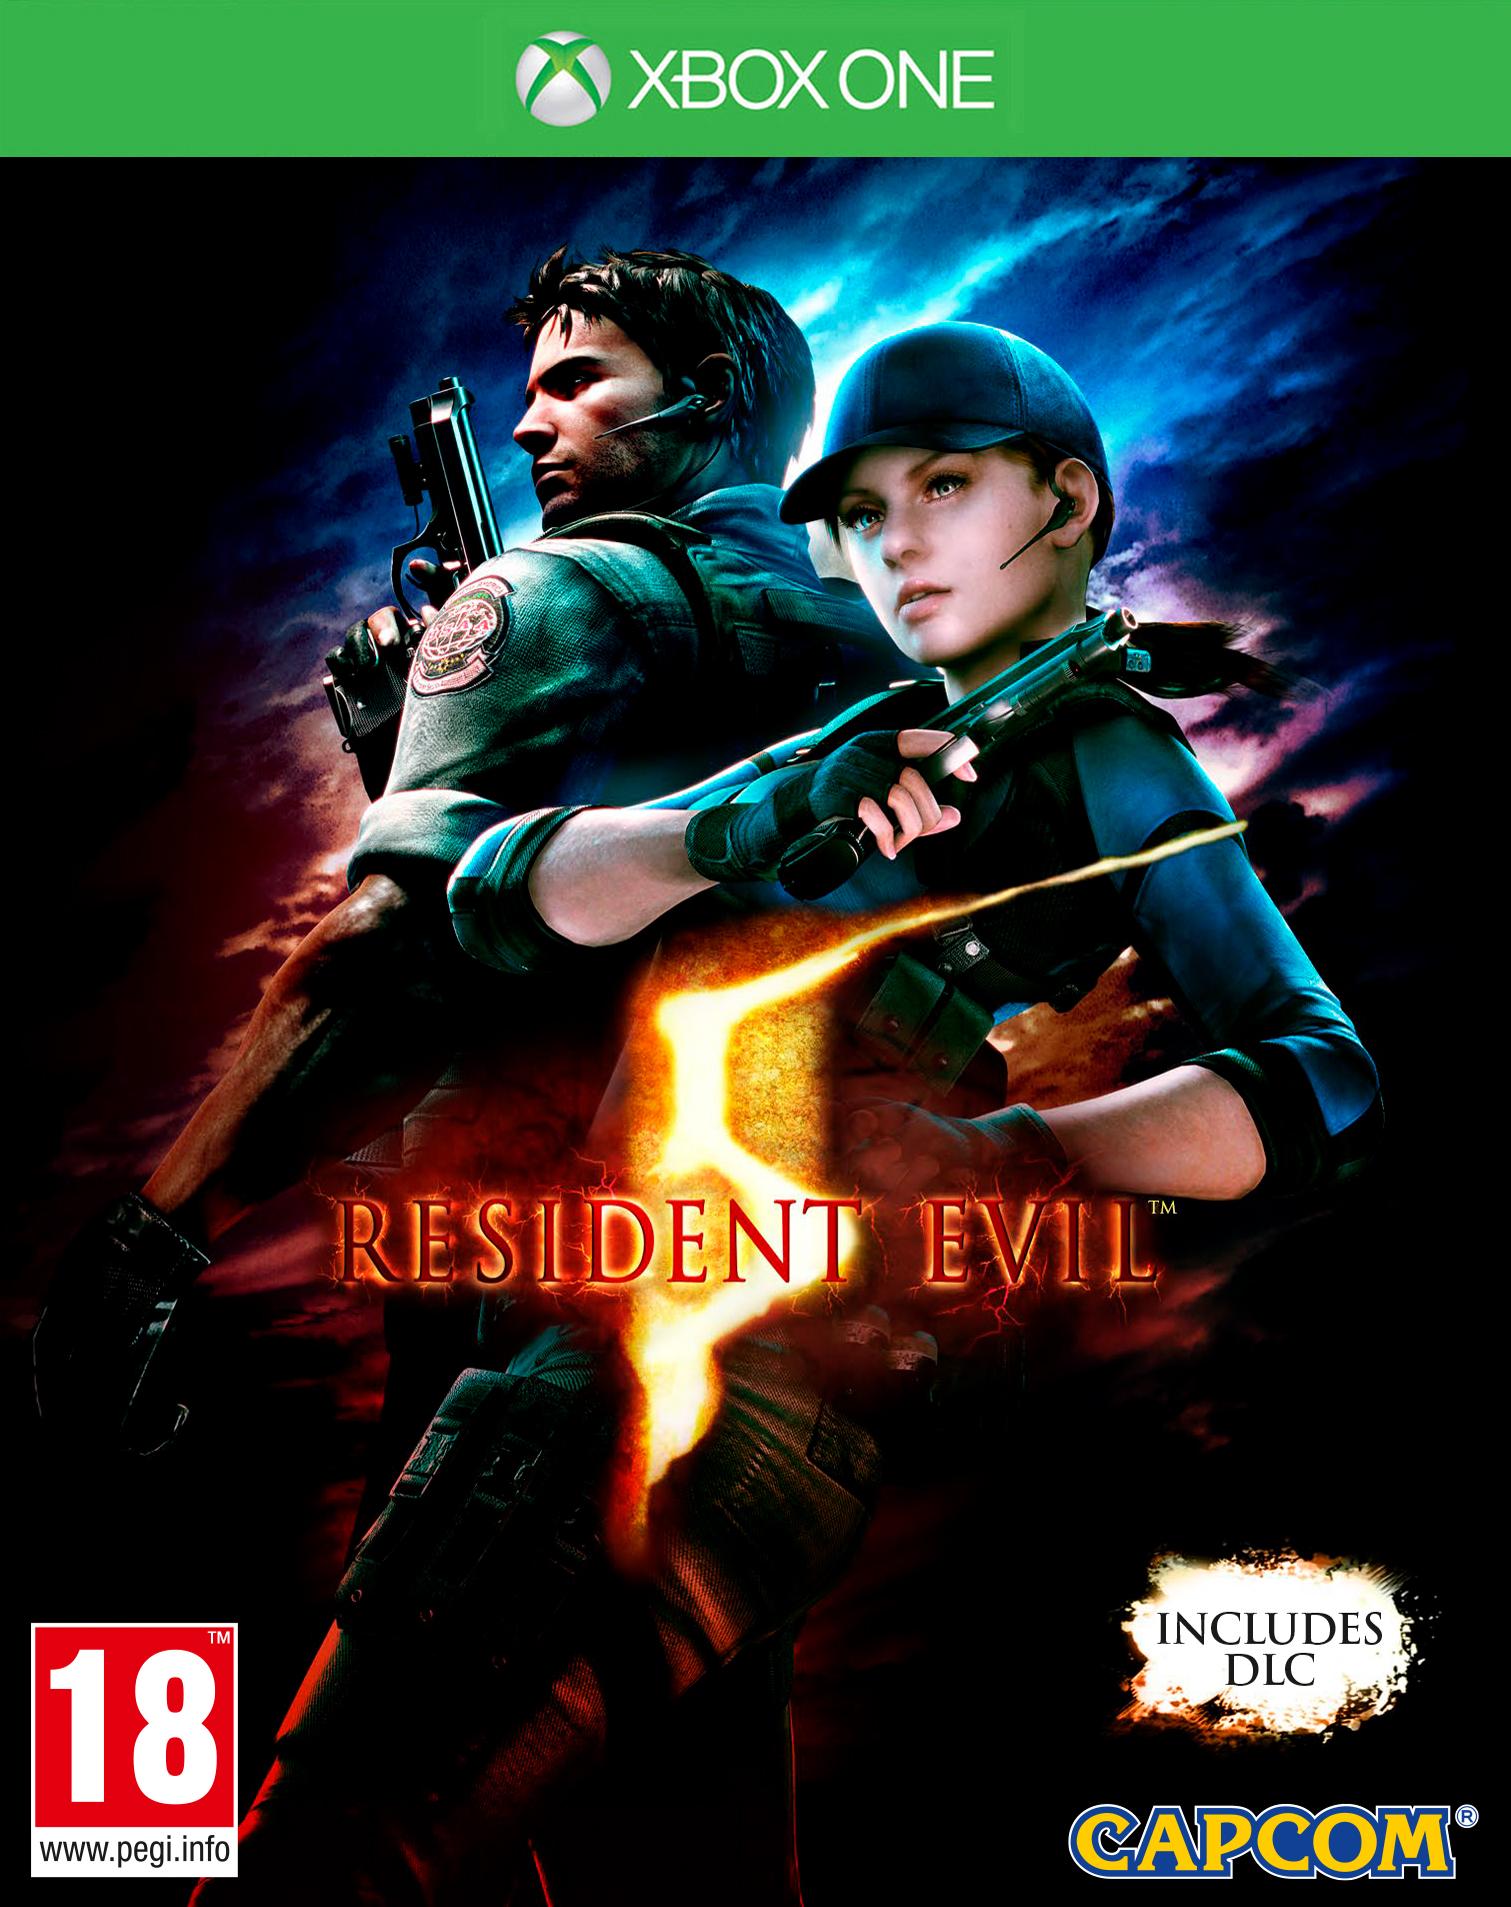 Resident Evil 5 Remastered (Xbox One), Capcom